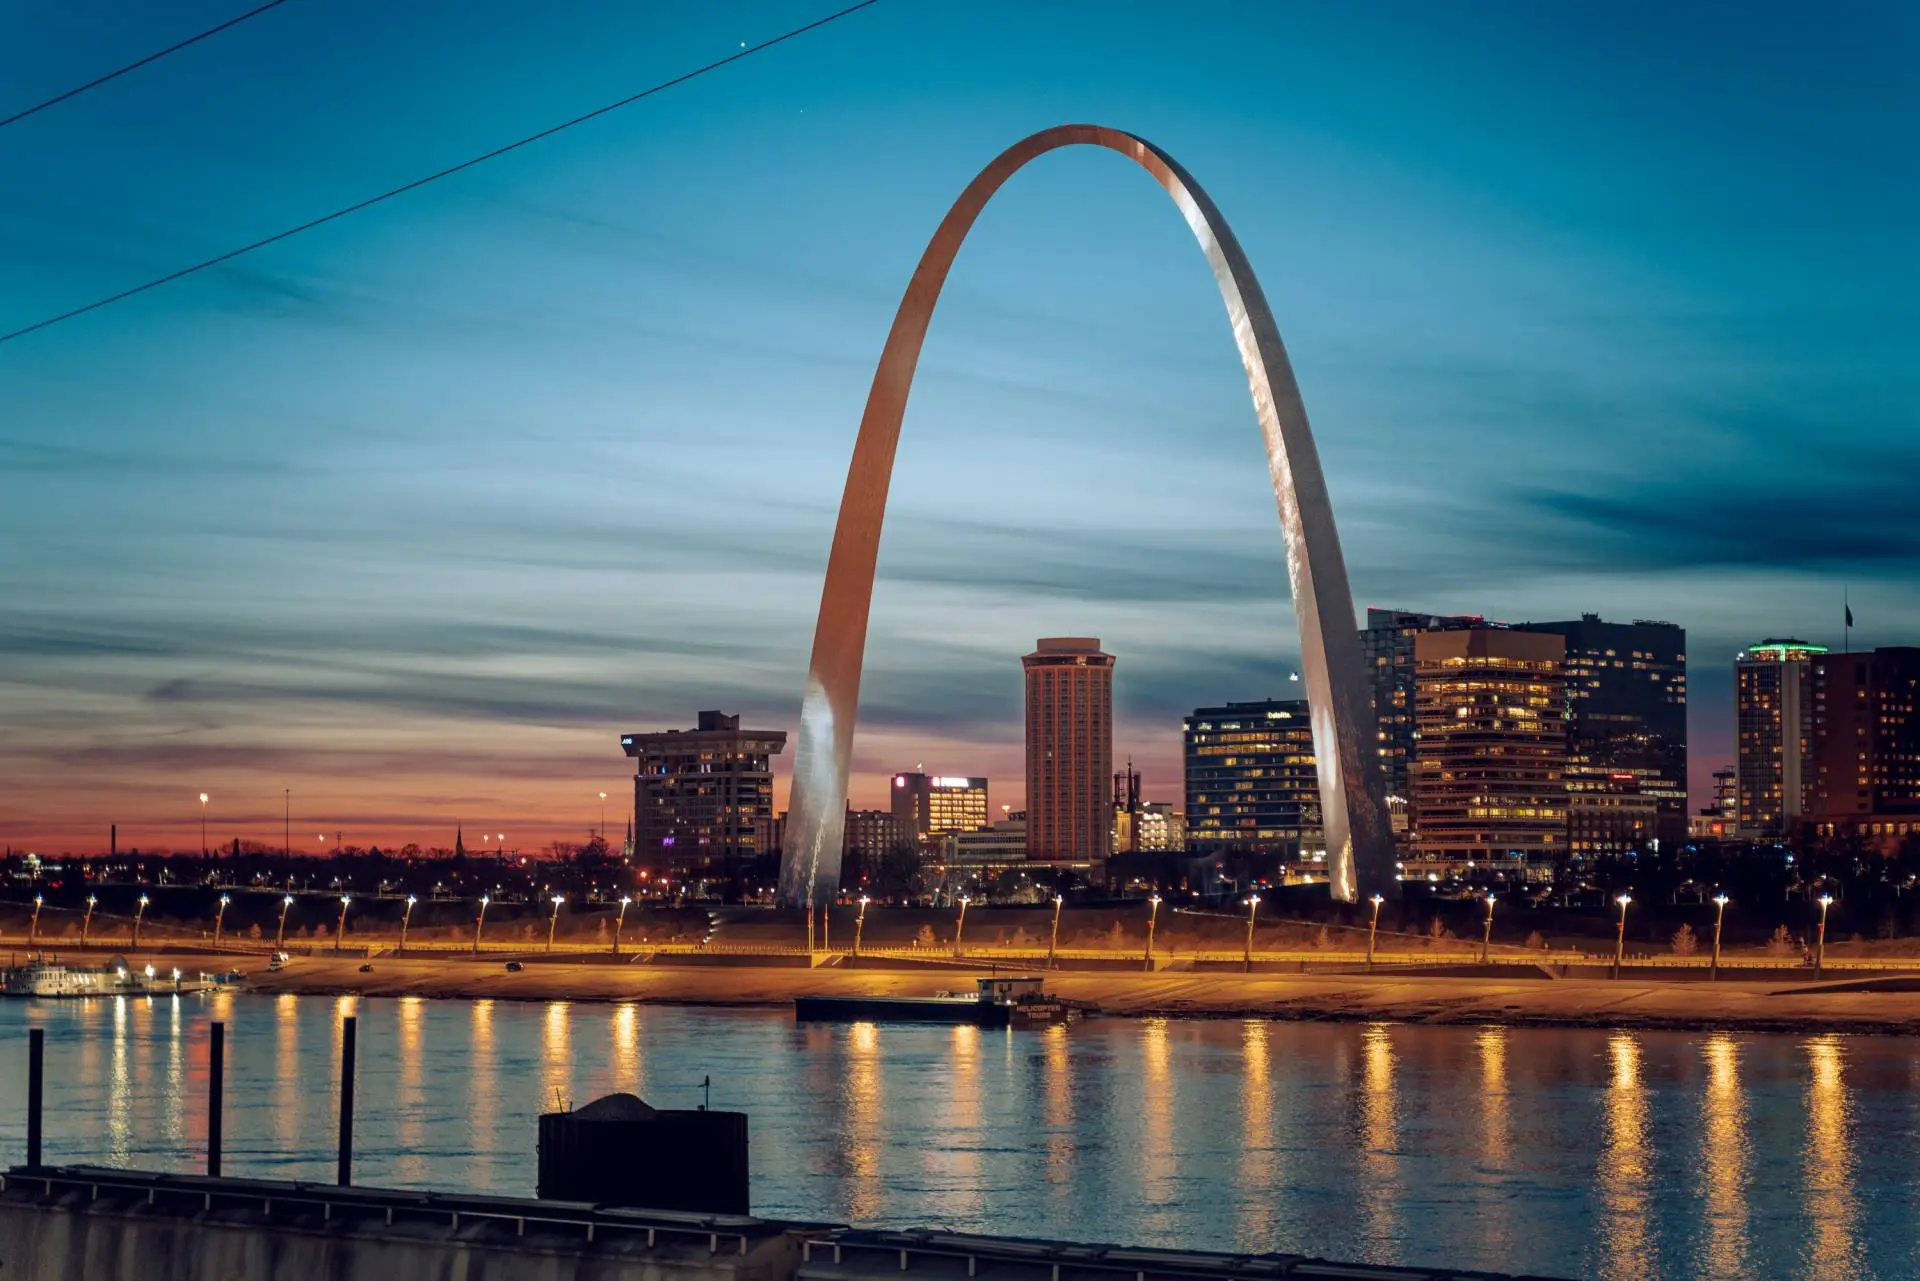 St. Louis Blues launch music-themed marketing effort